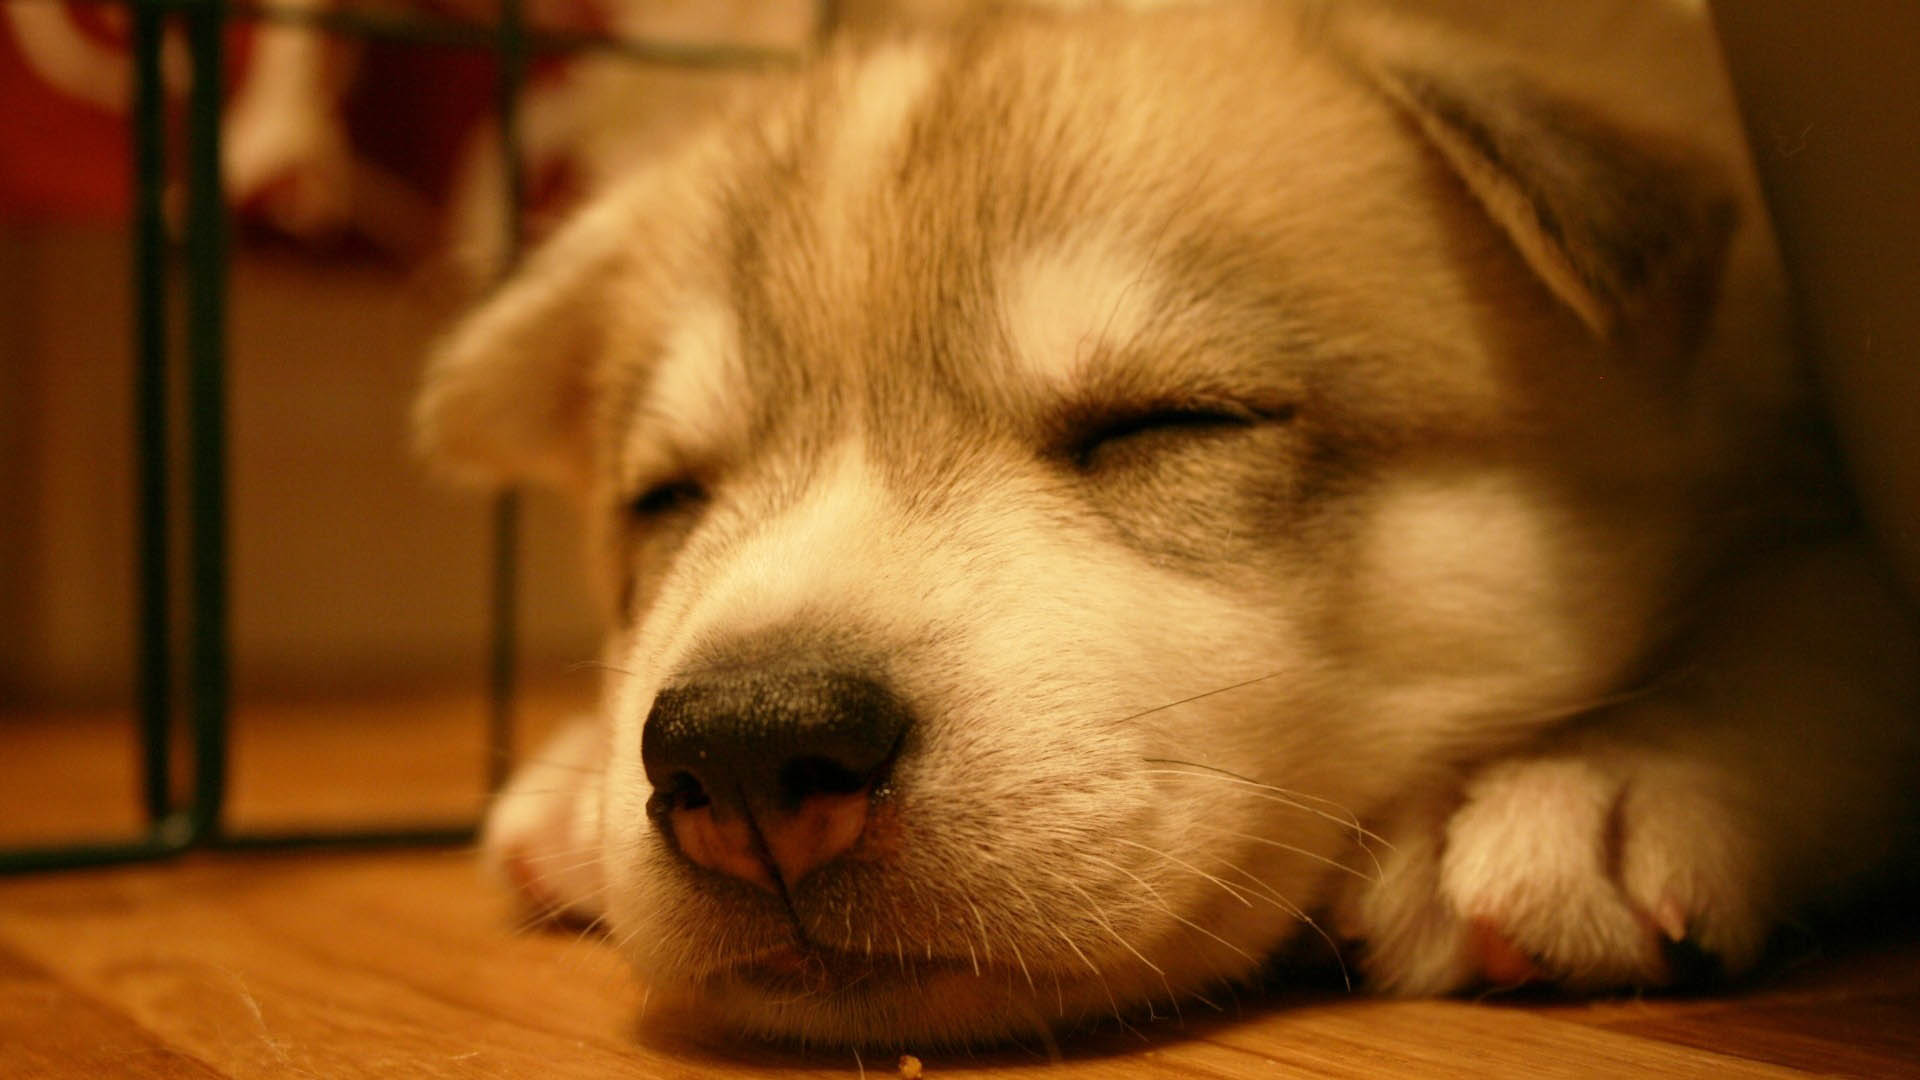 Dog Wallpaper Cute Sleep HD Desktop 4k